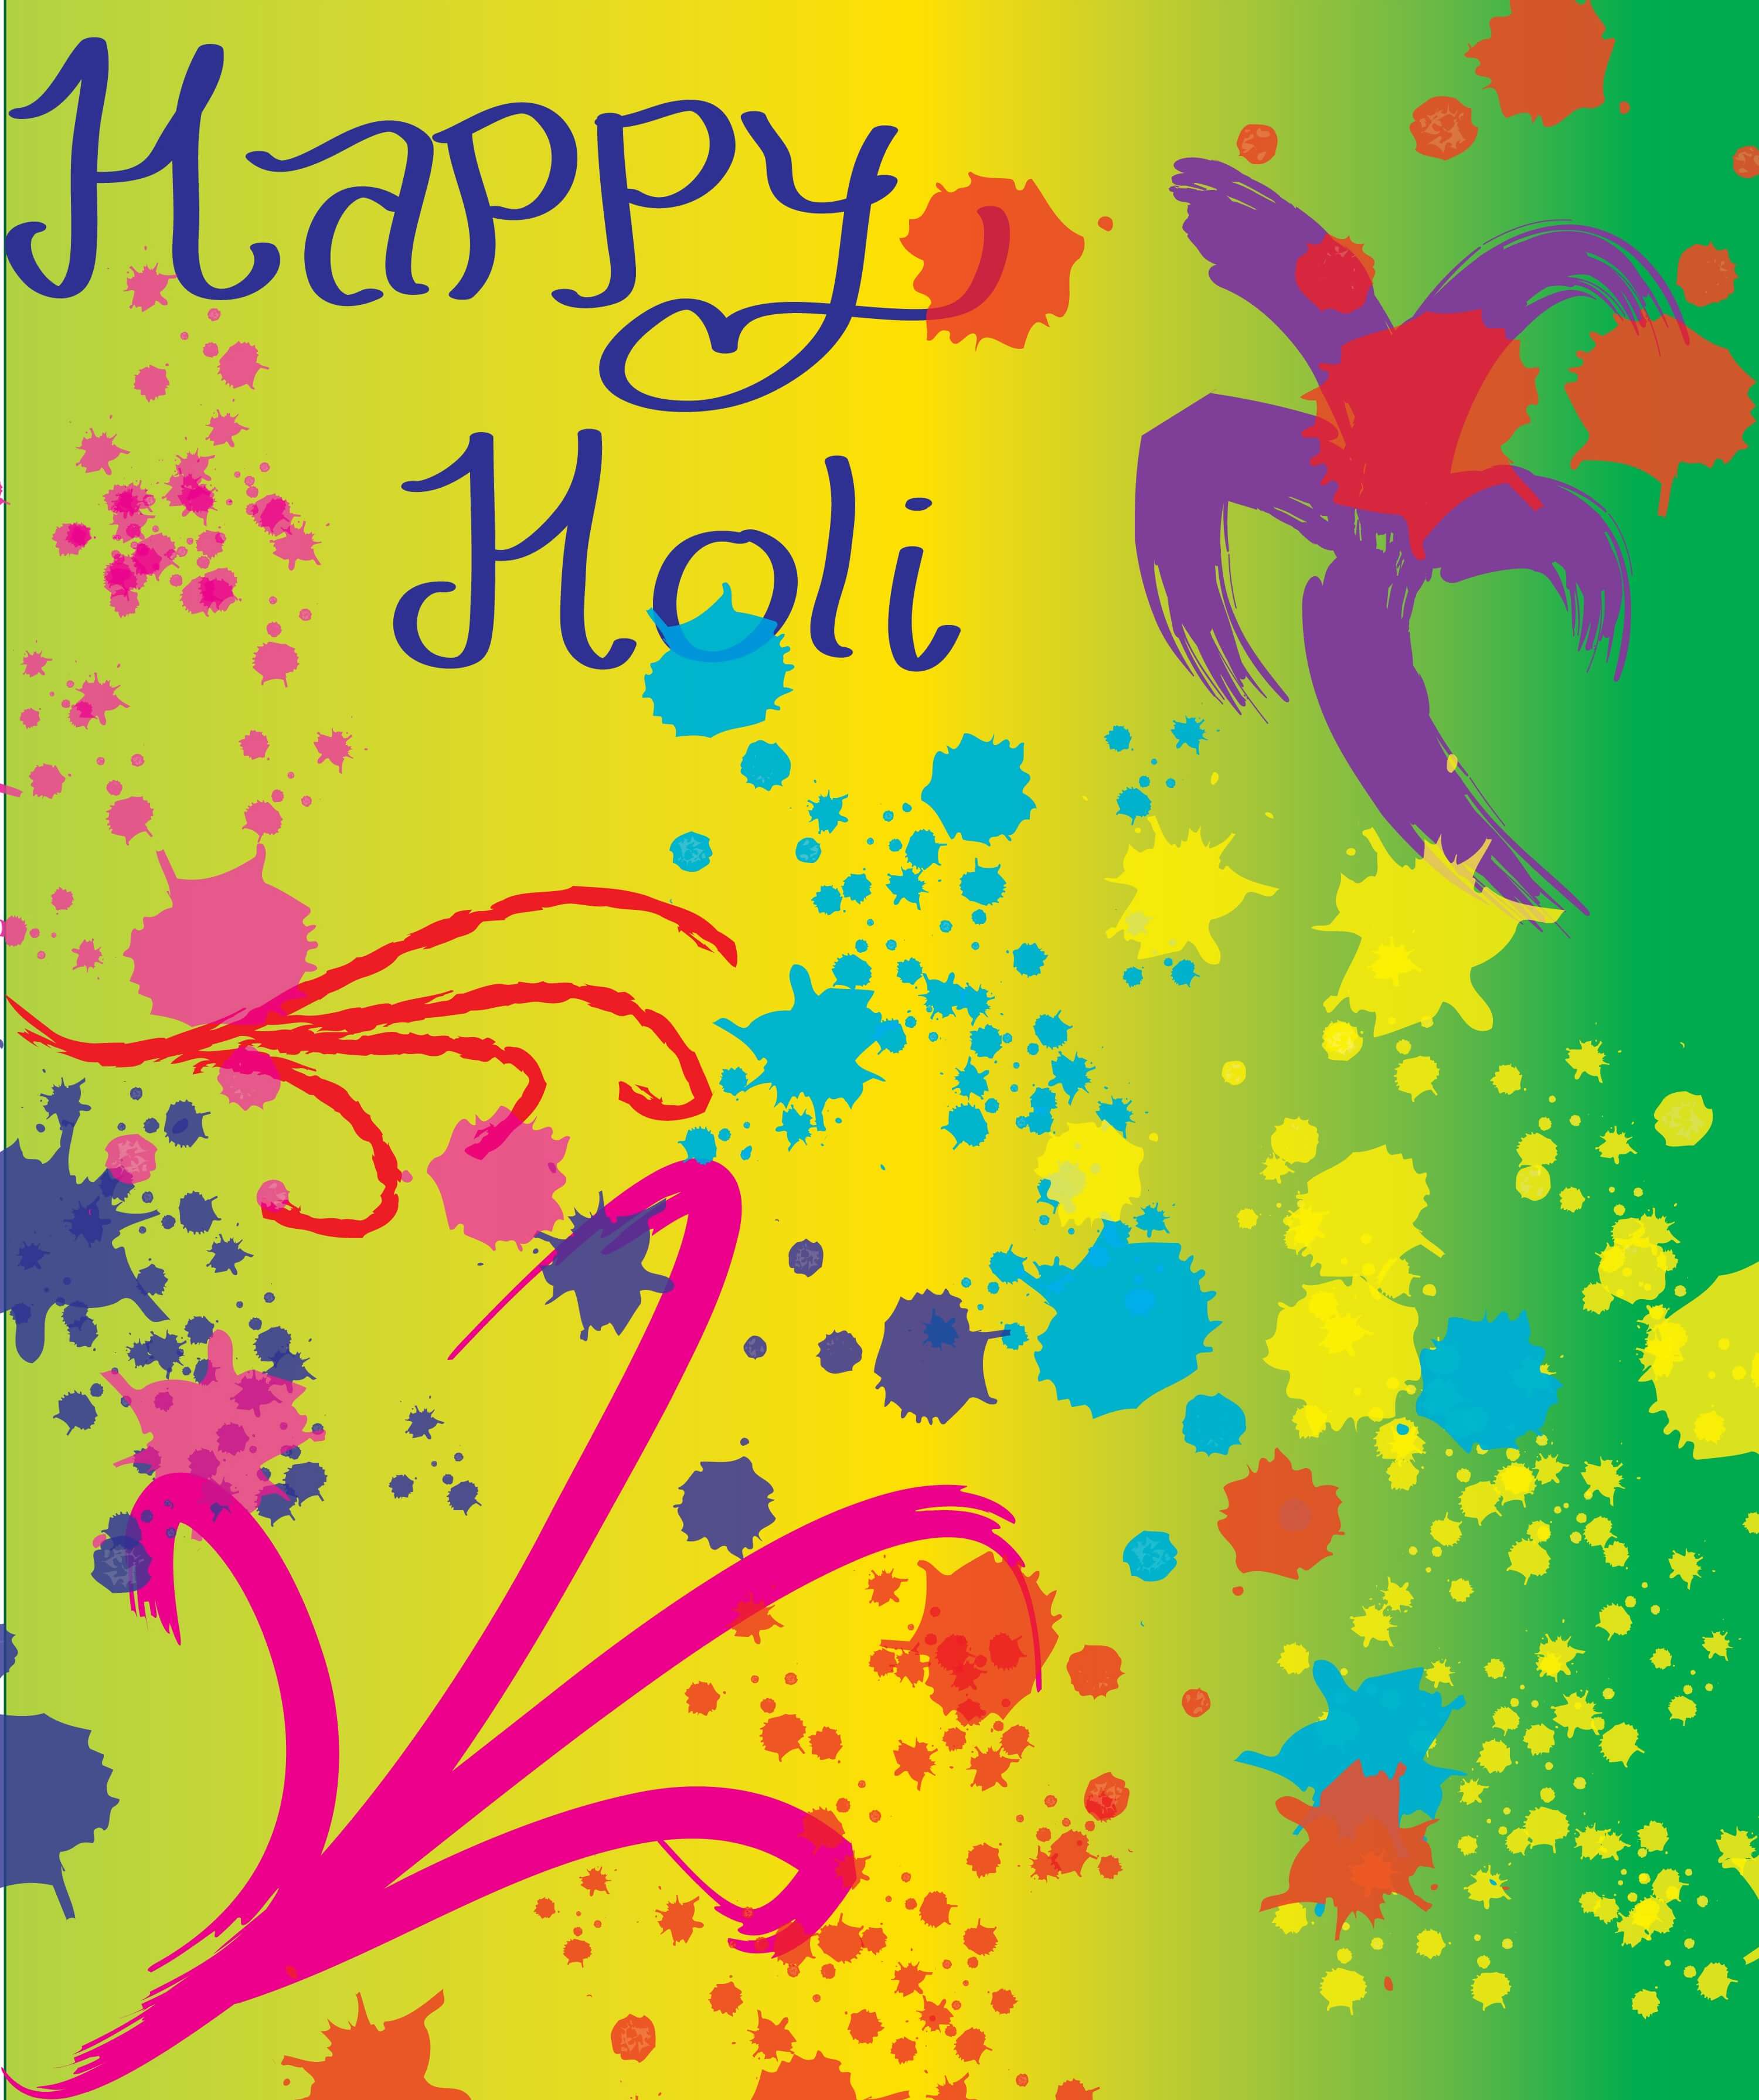 Holi | eGreetings Portal